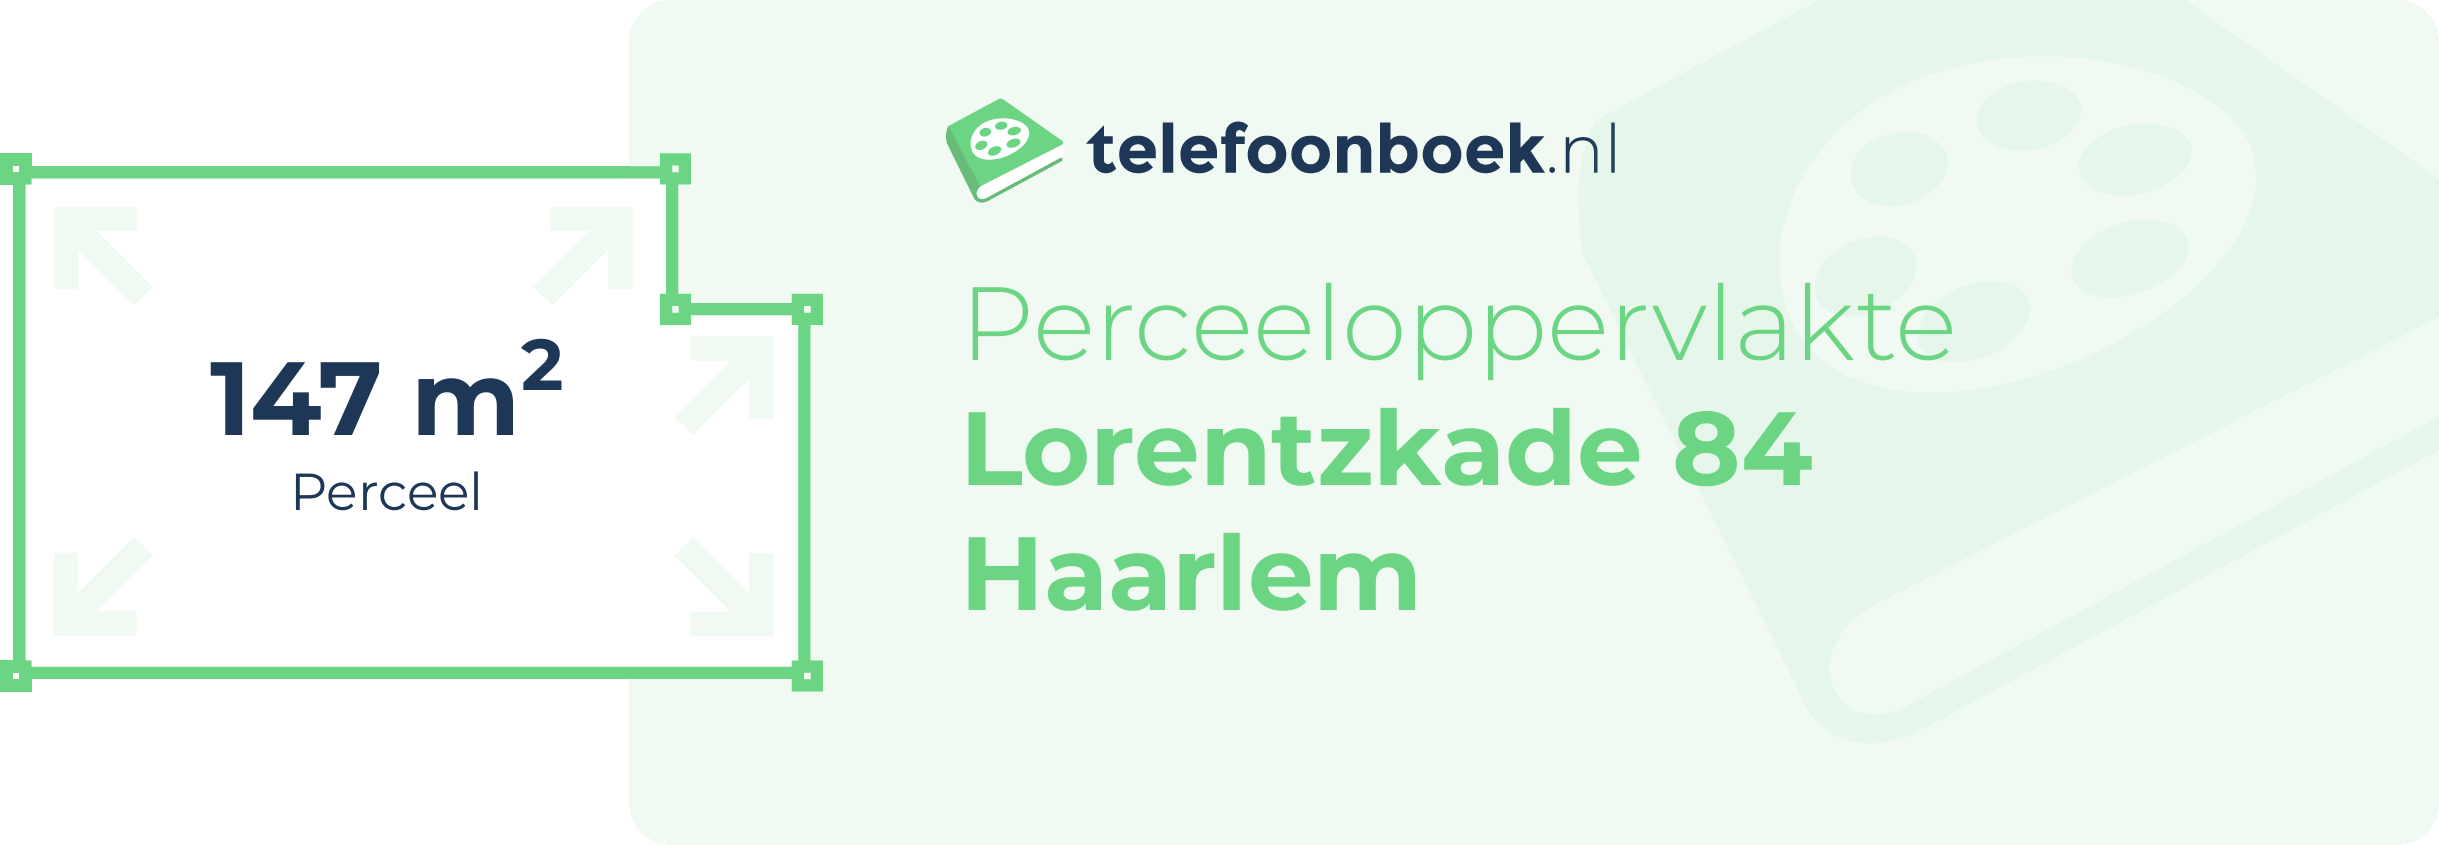 Perceeloppervlakte Lorentzkade 84 Haarlem